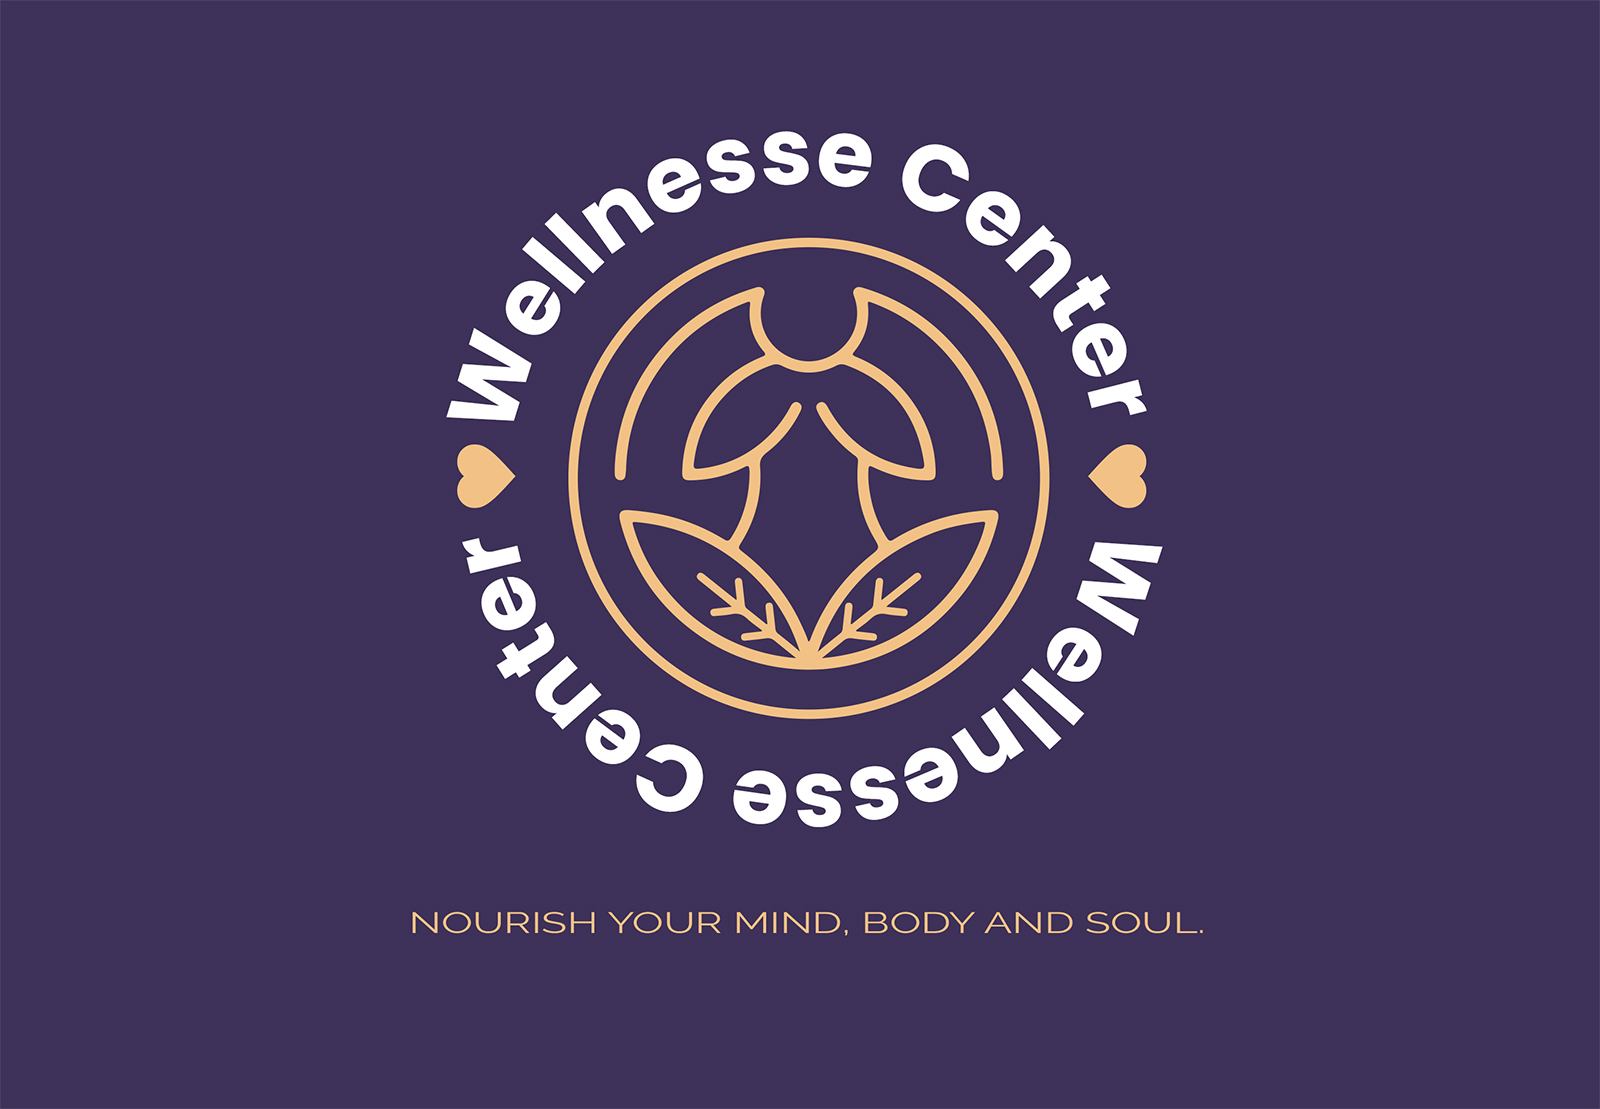 Wellnesse Center Elevate Your Wellness Journey with Wellnesse Center